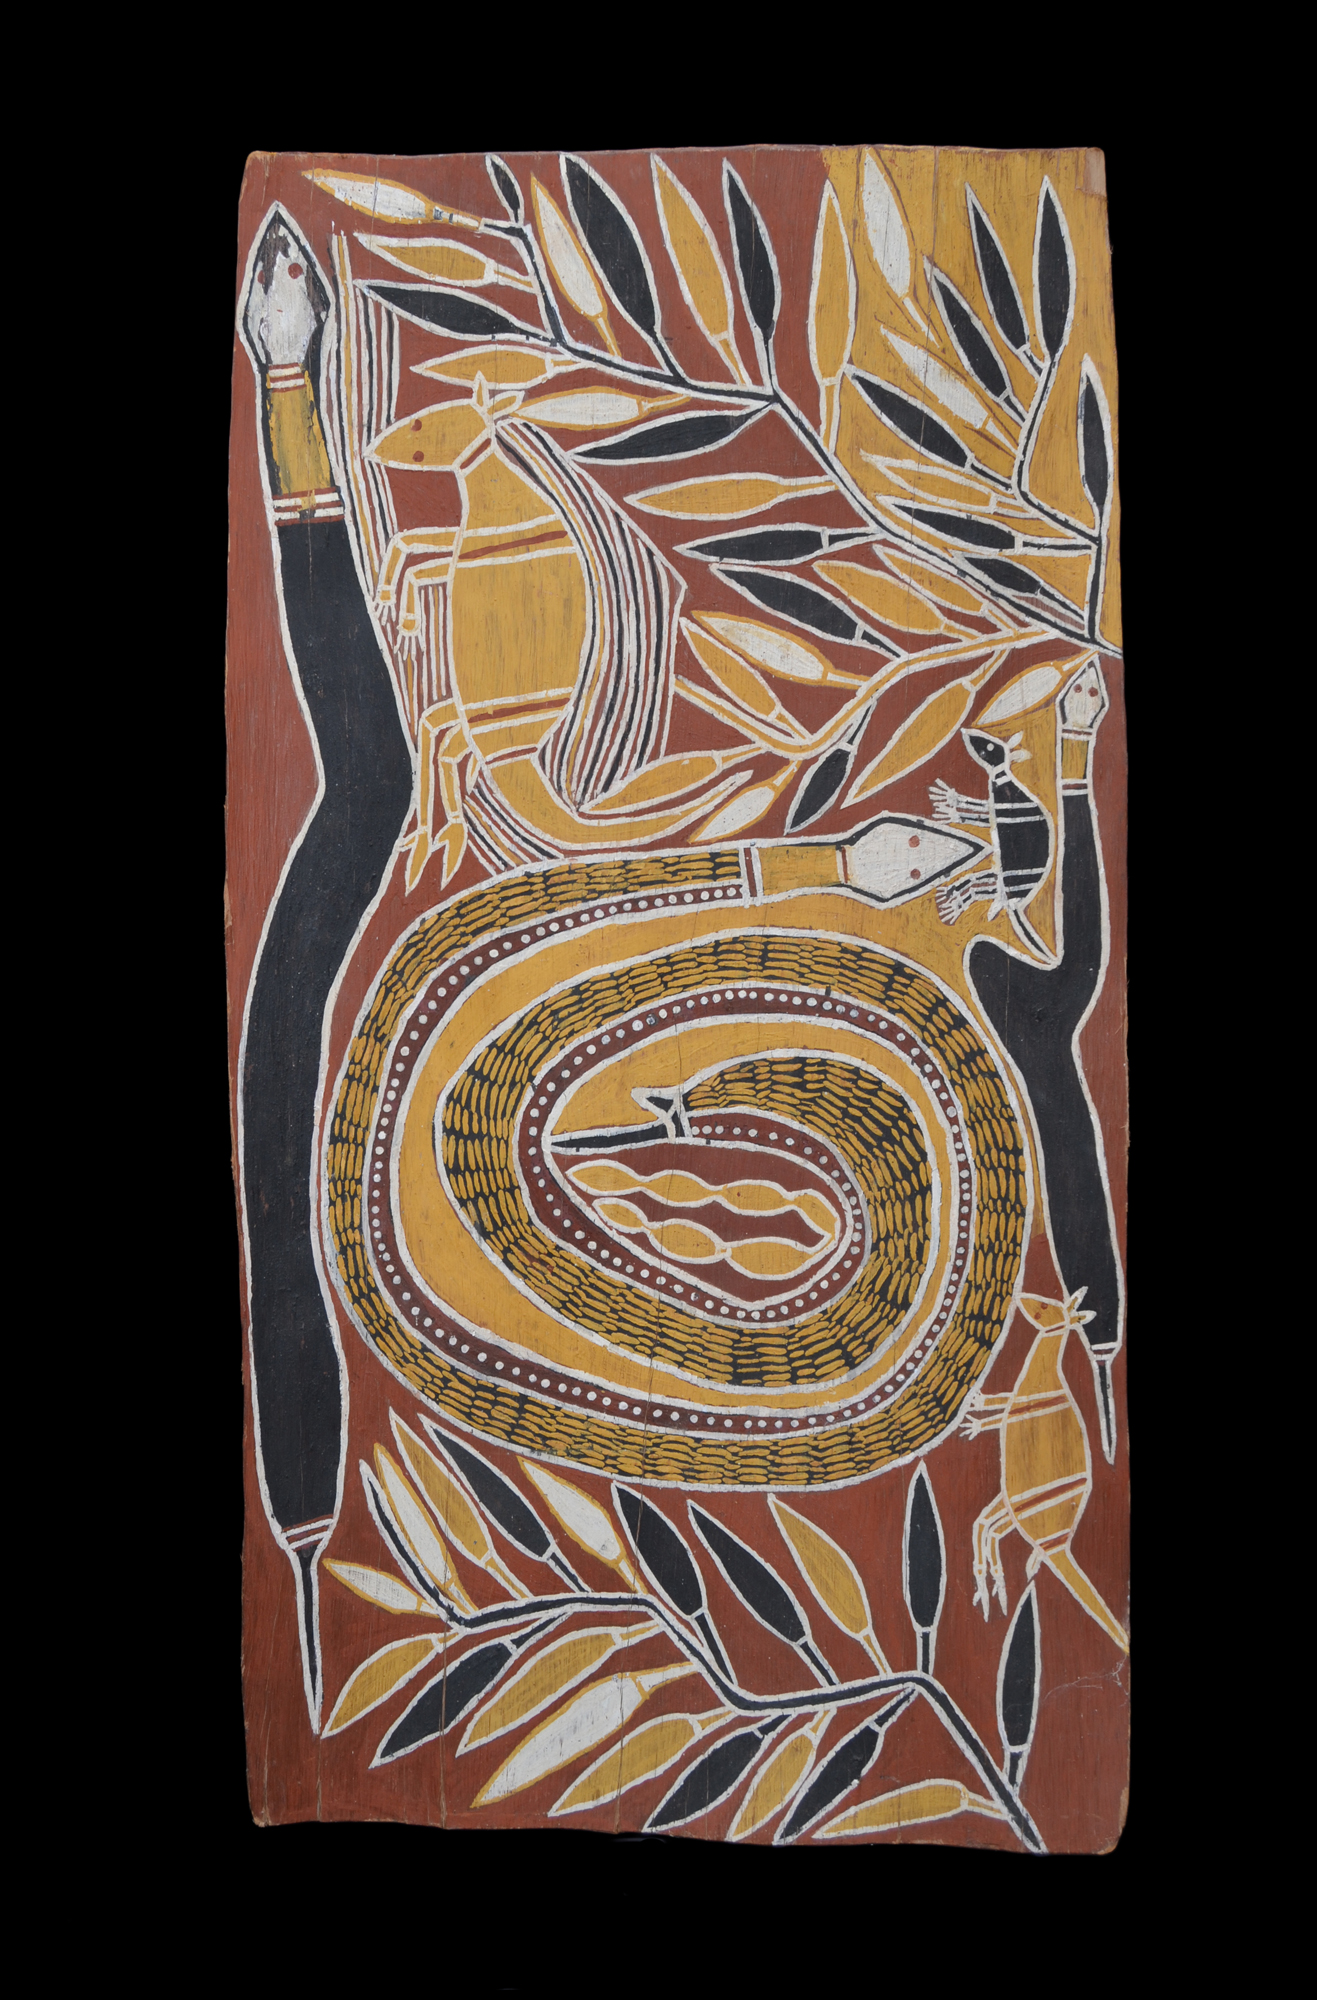 A Fine Older Australian Aboriginal Bark Painting From Central Arnhem Land